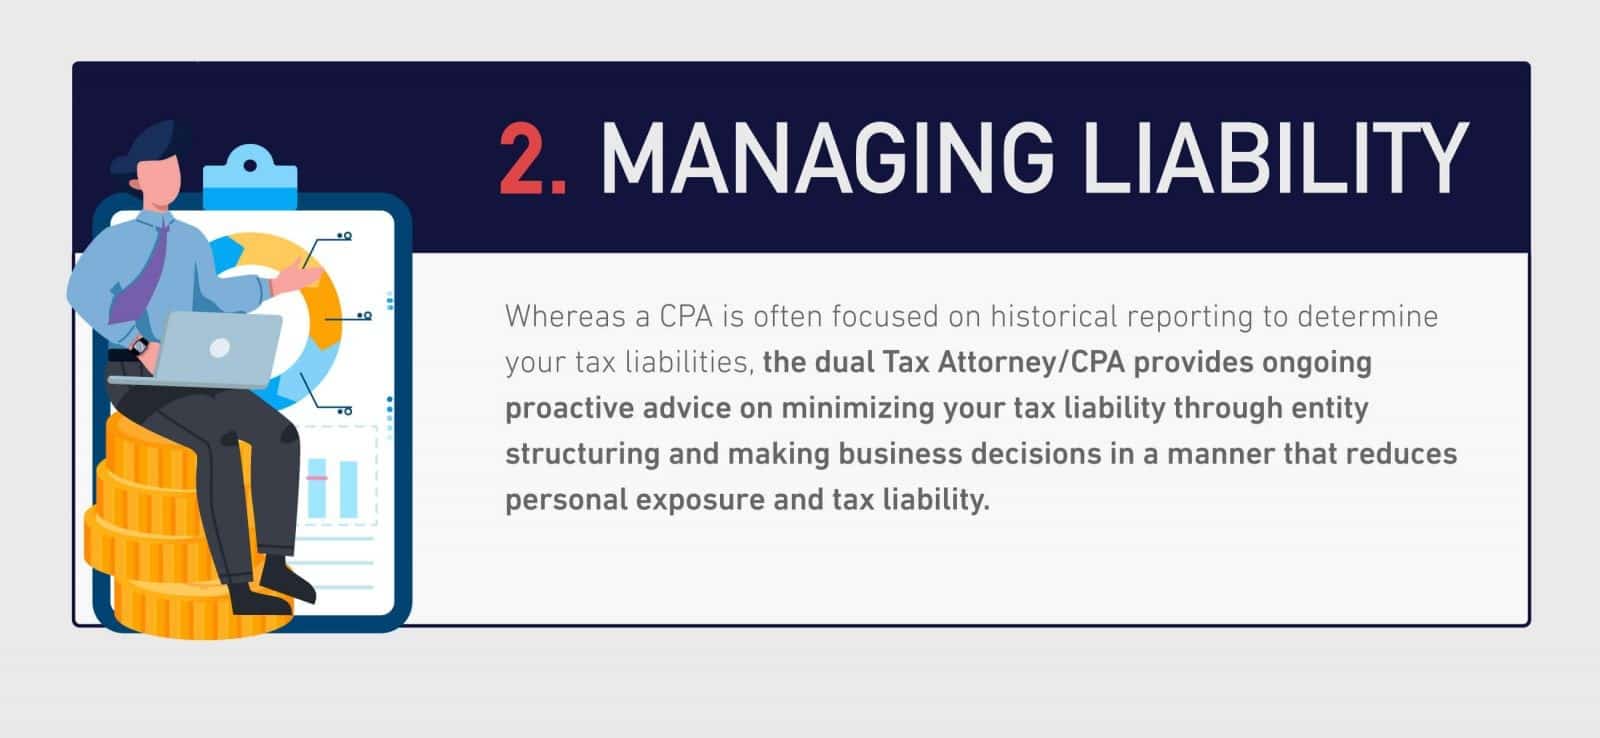 Managing-liability-klasing-associates-santa-barbara-tax-attorney